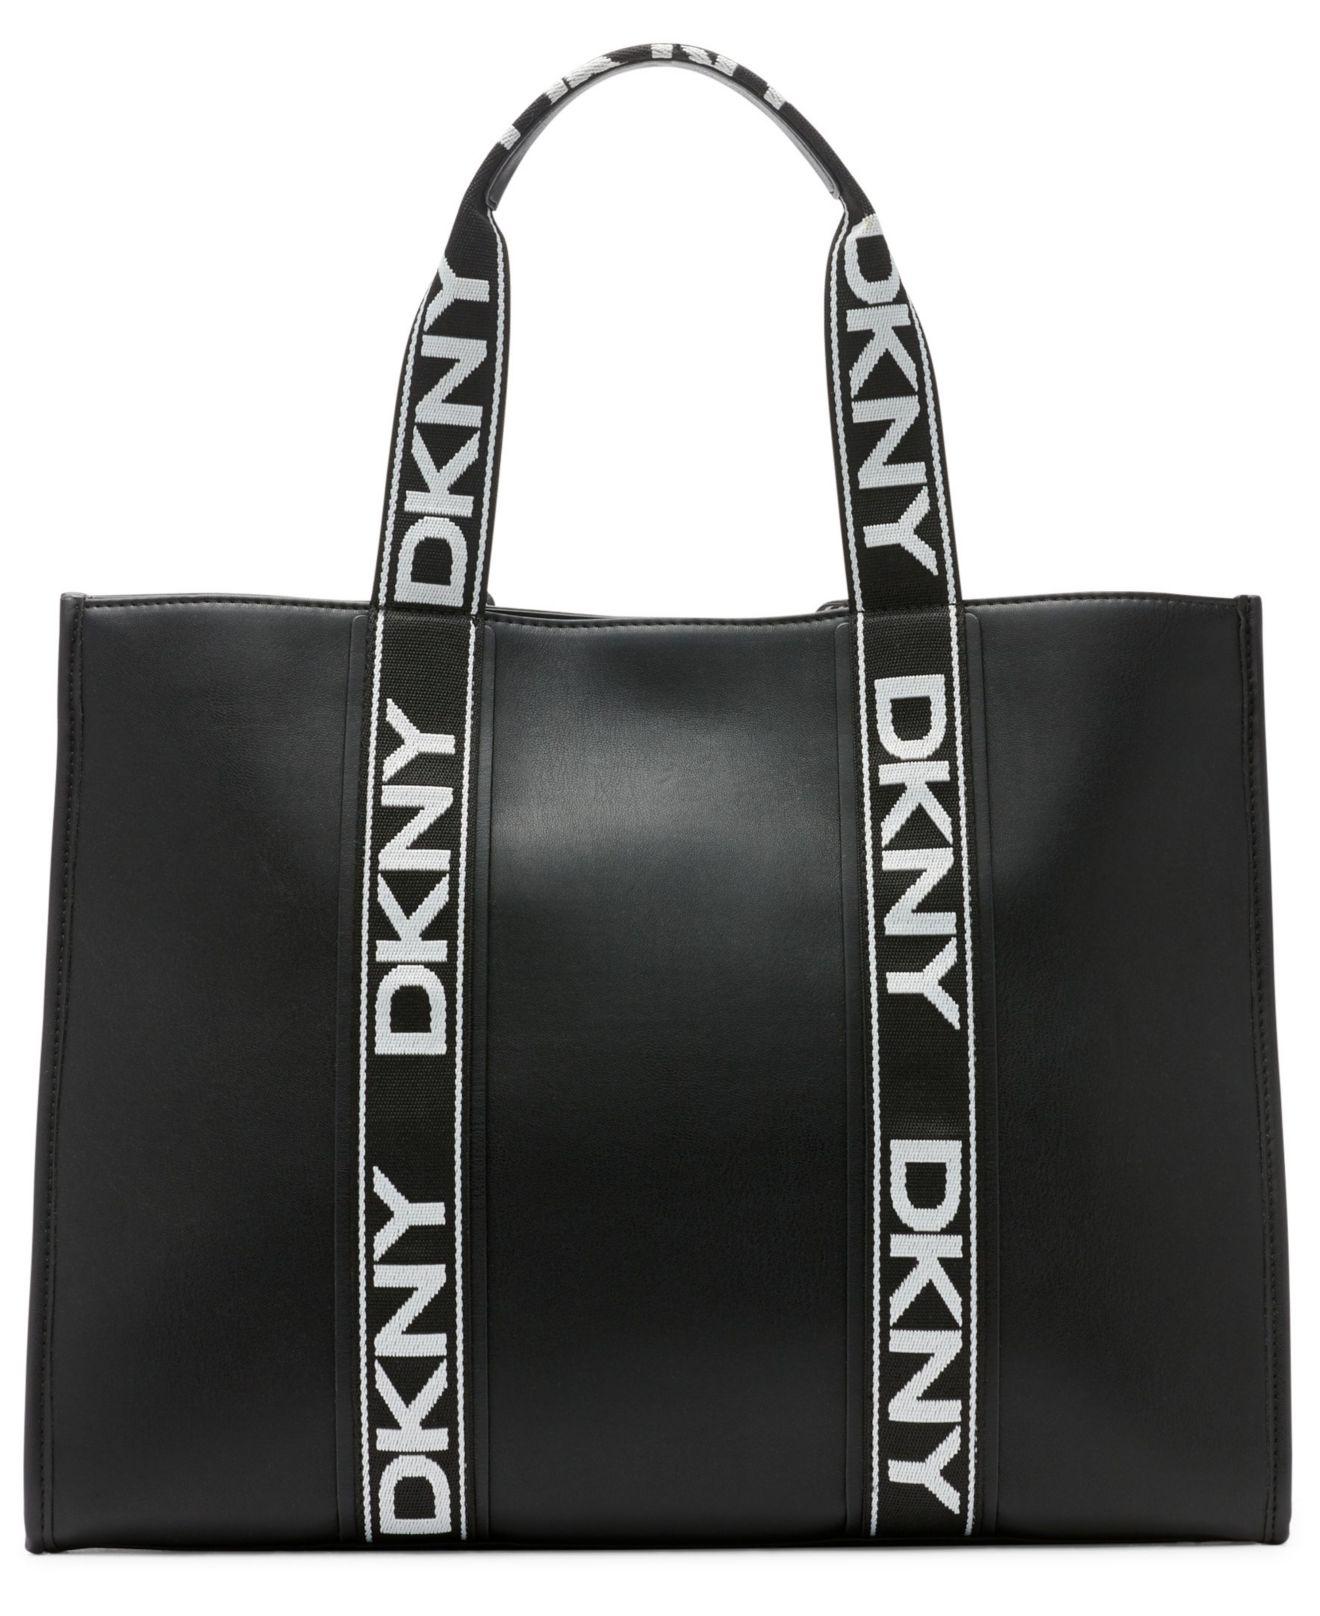 Women's Totes & Bucket Bags - DKNY